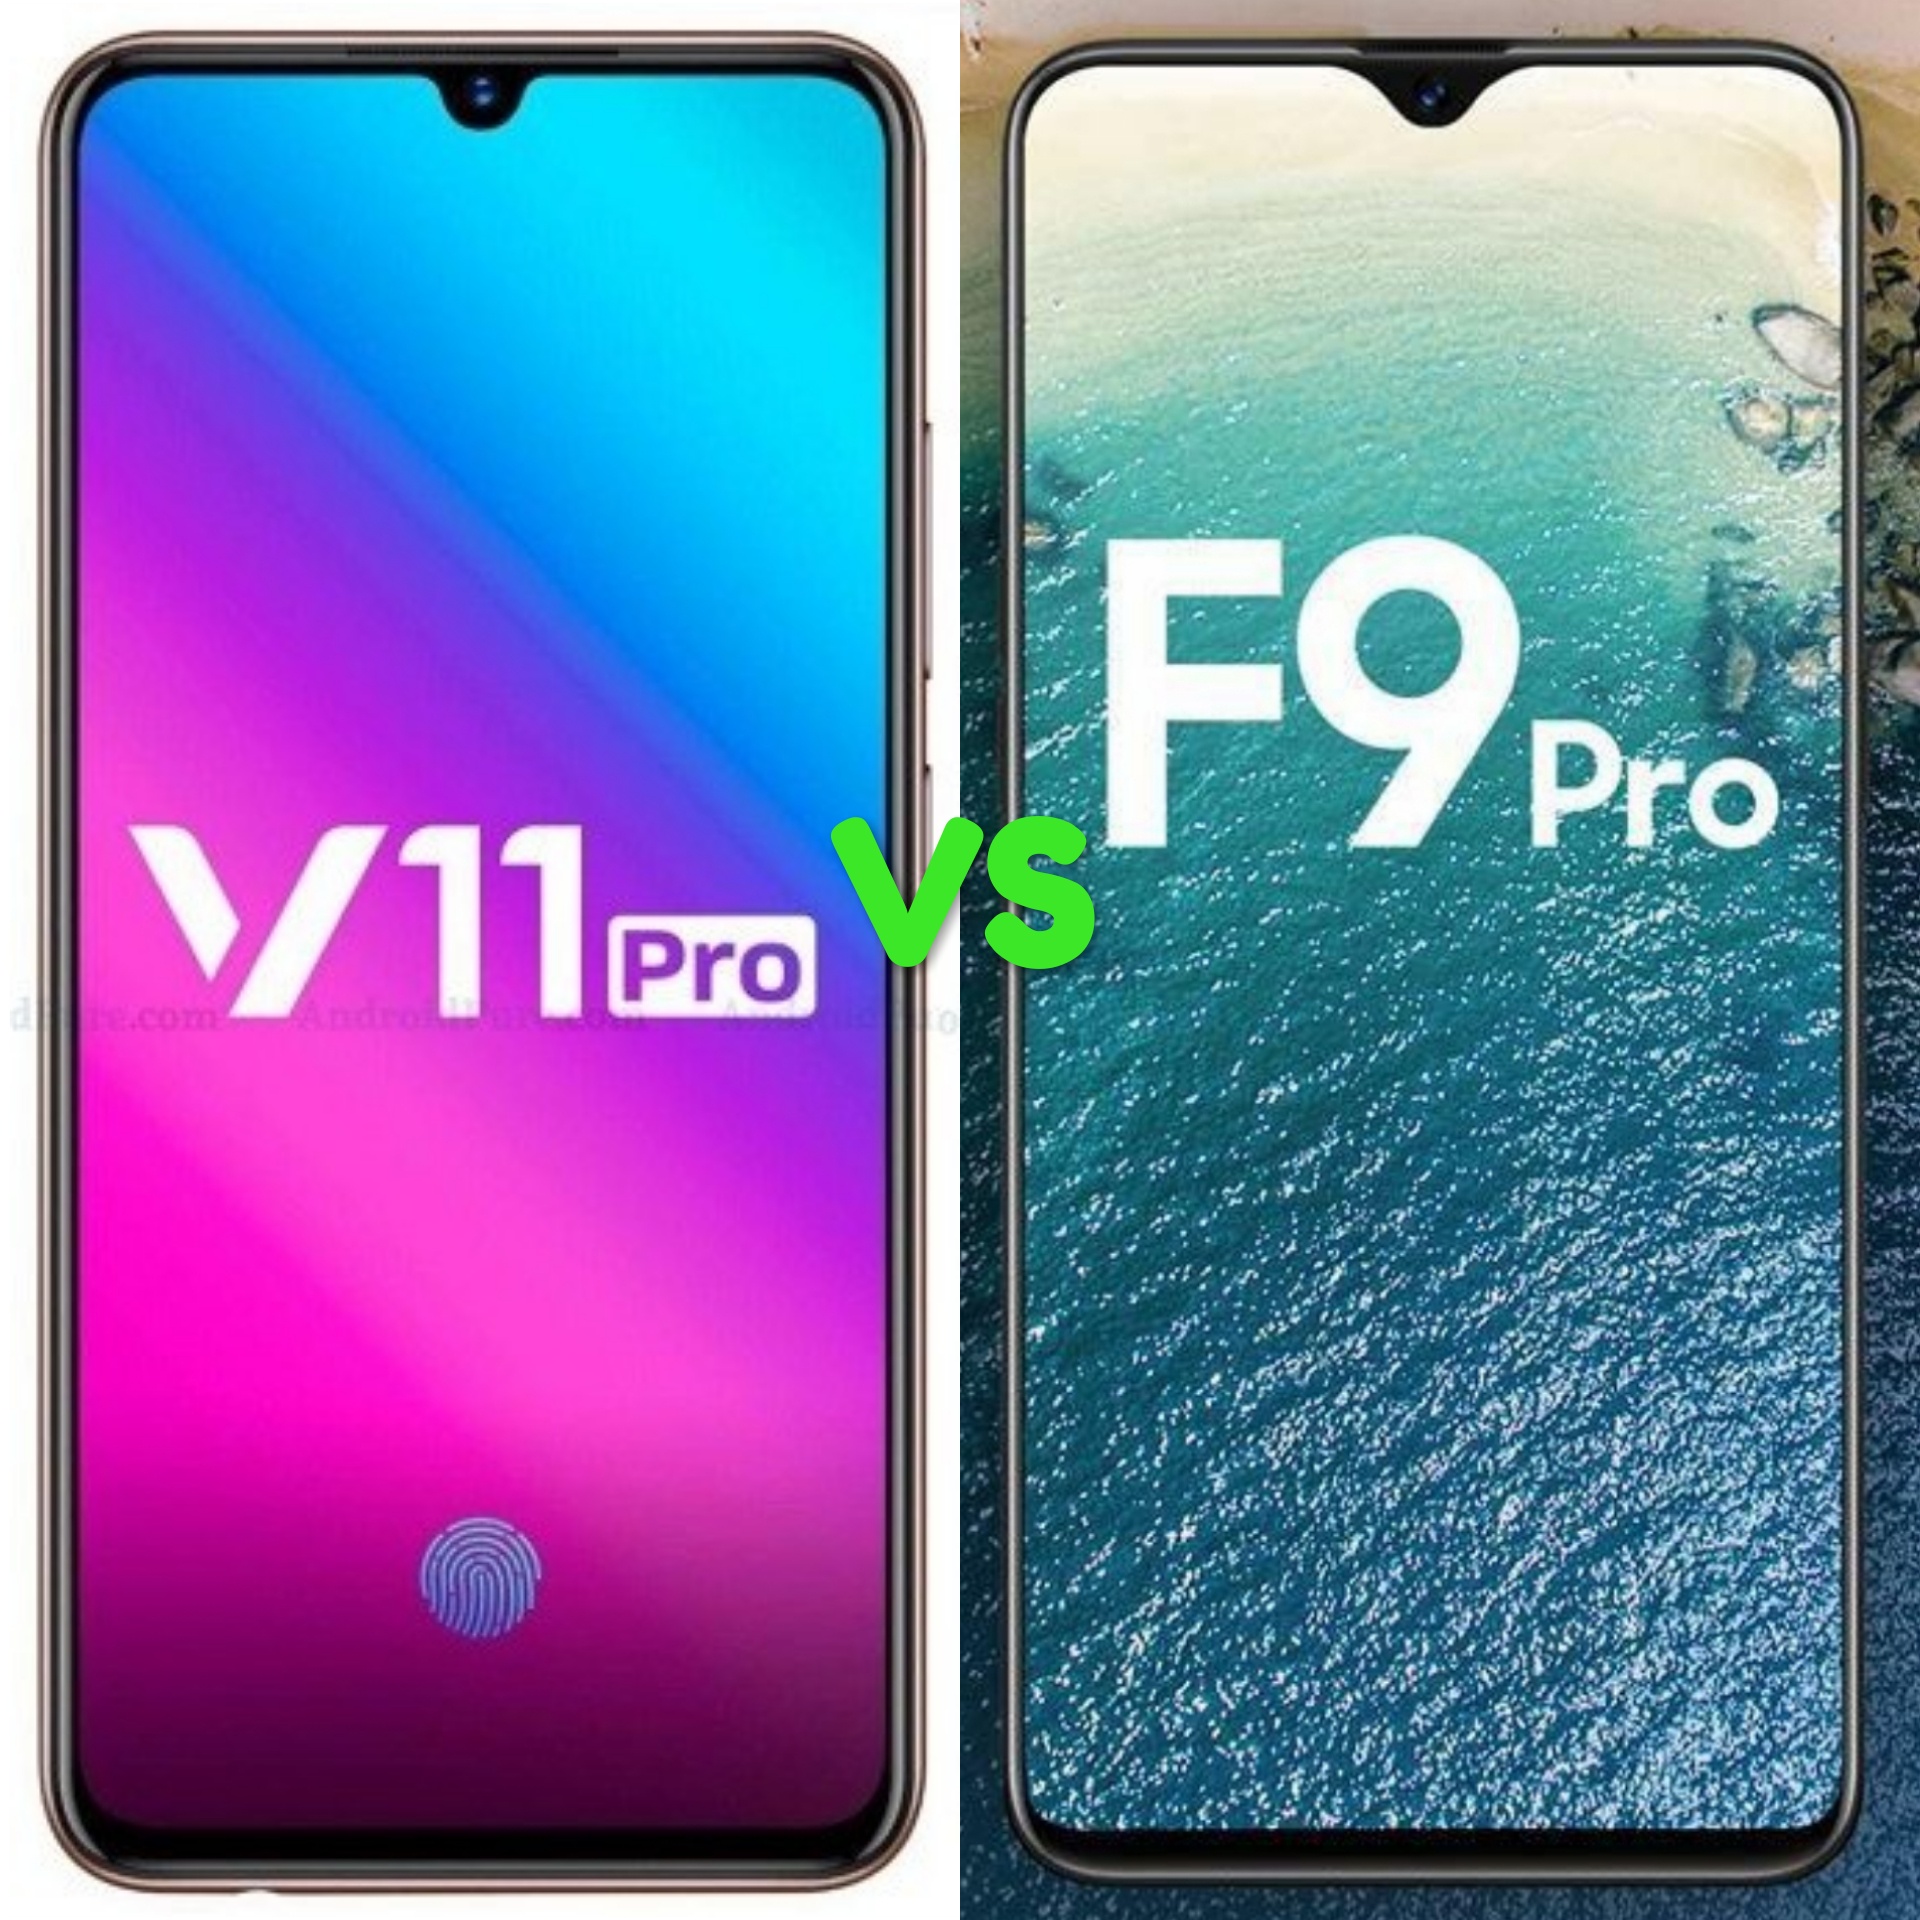  Vivo  V11 Pro  Vs Oppo F9  Pro  The Oppo F9  Pro  doesn t stand 